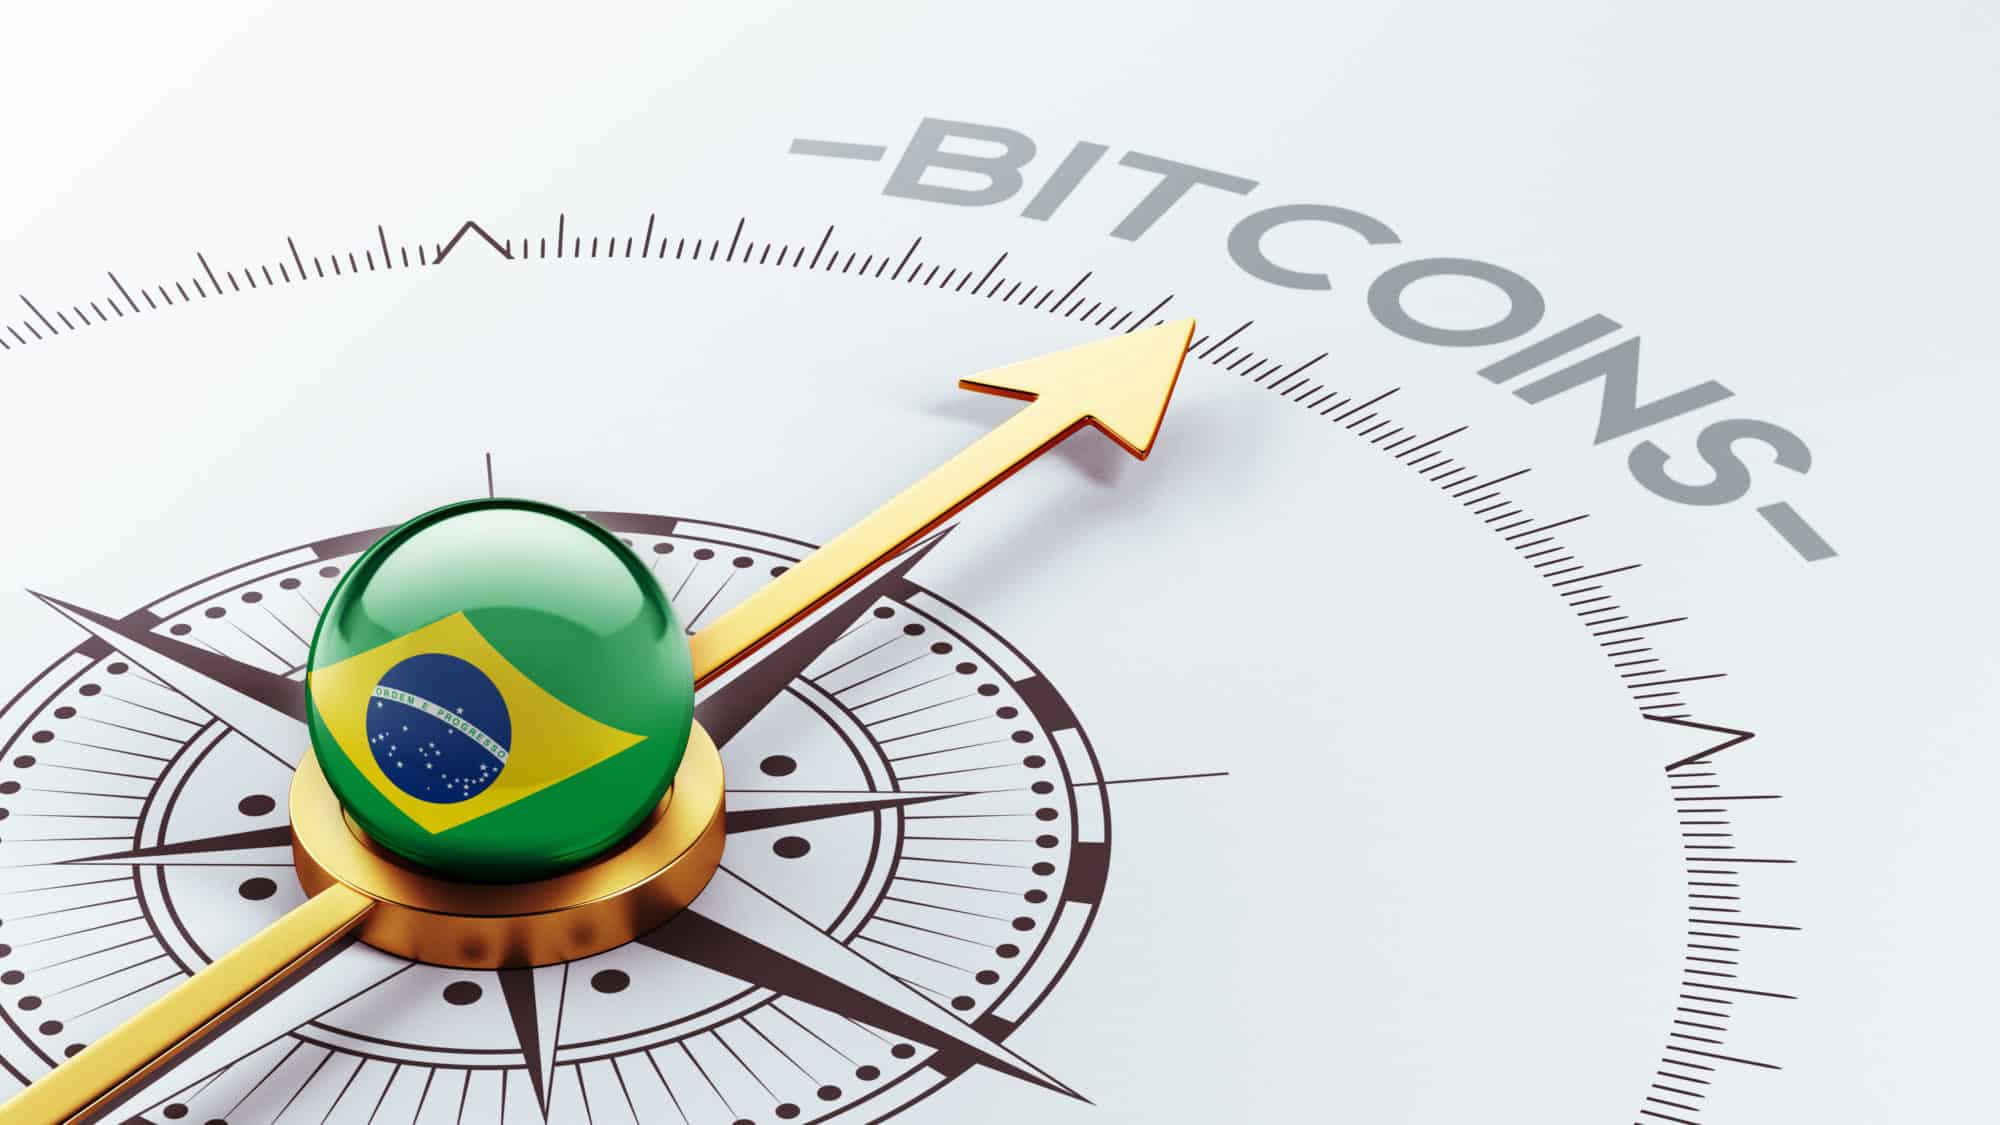 Brazil High Resolution Bitcoin Concept